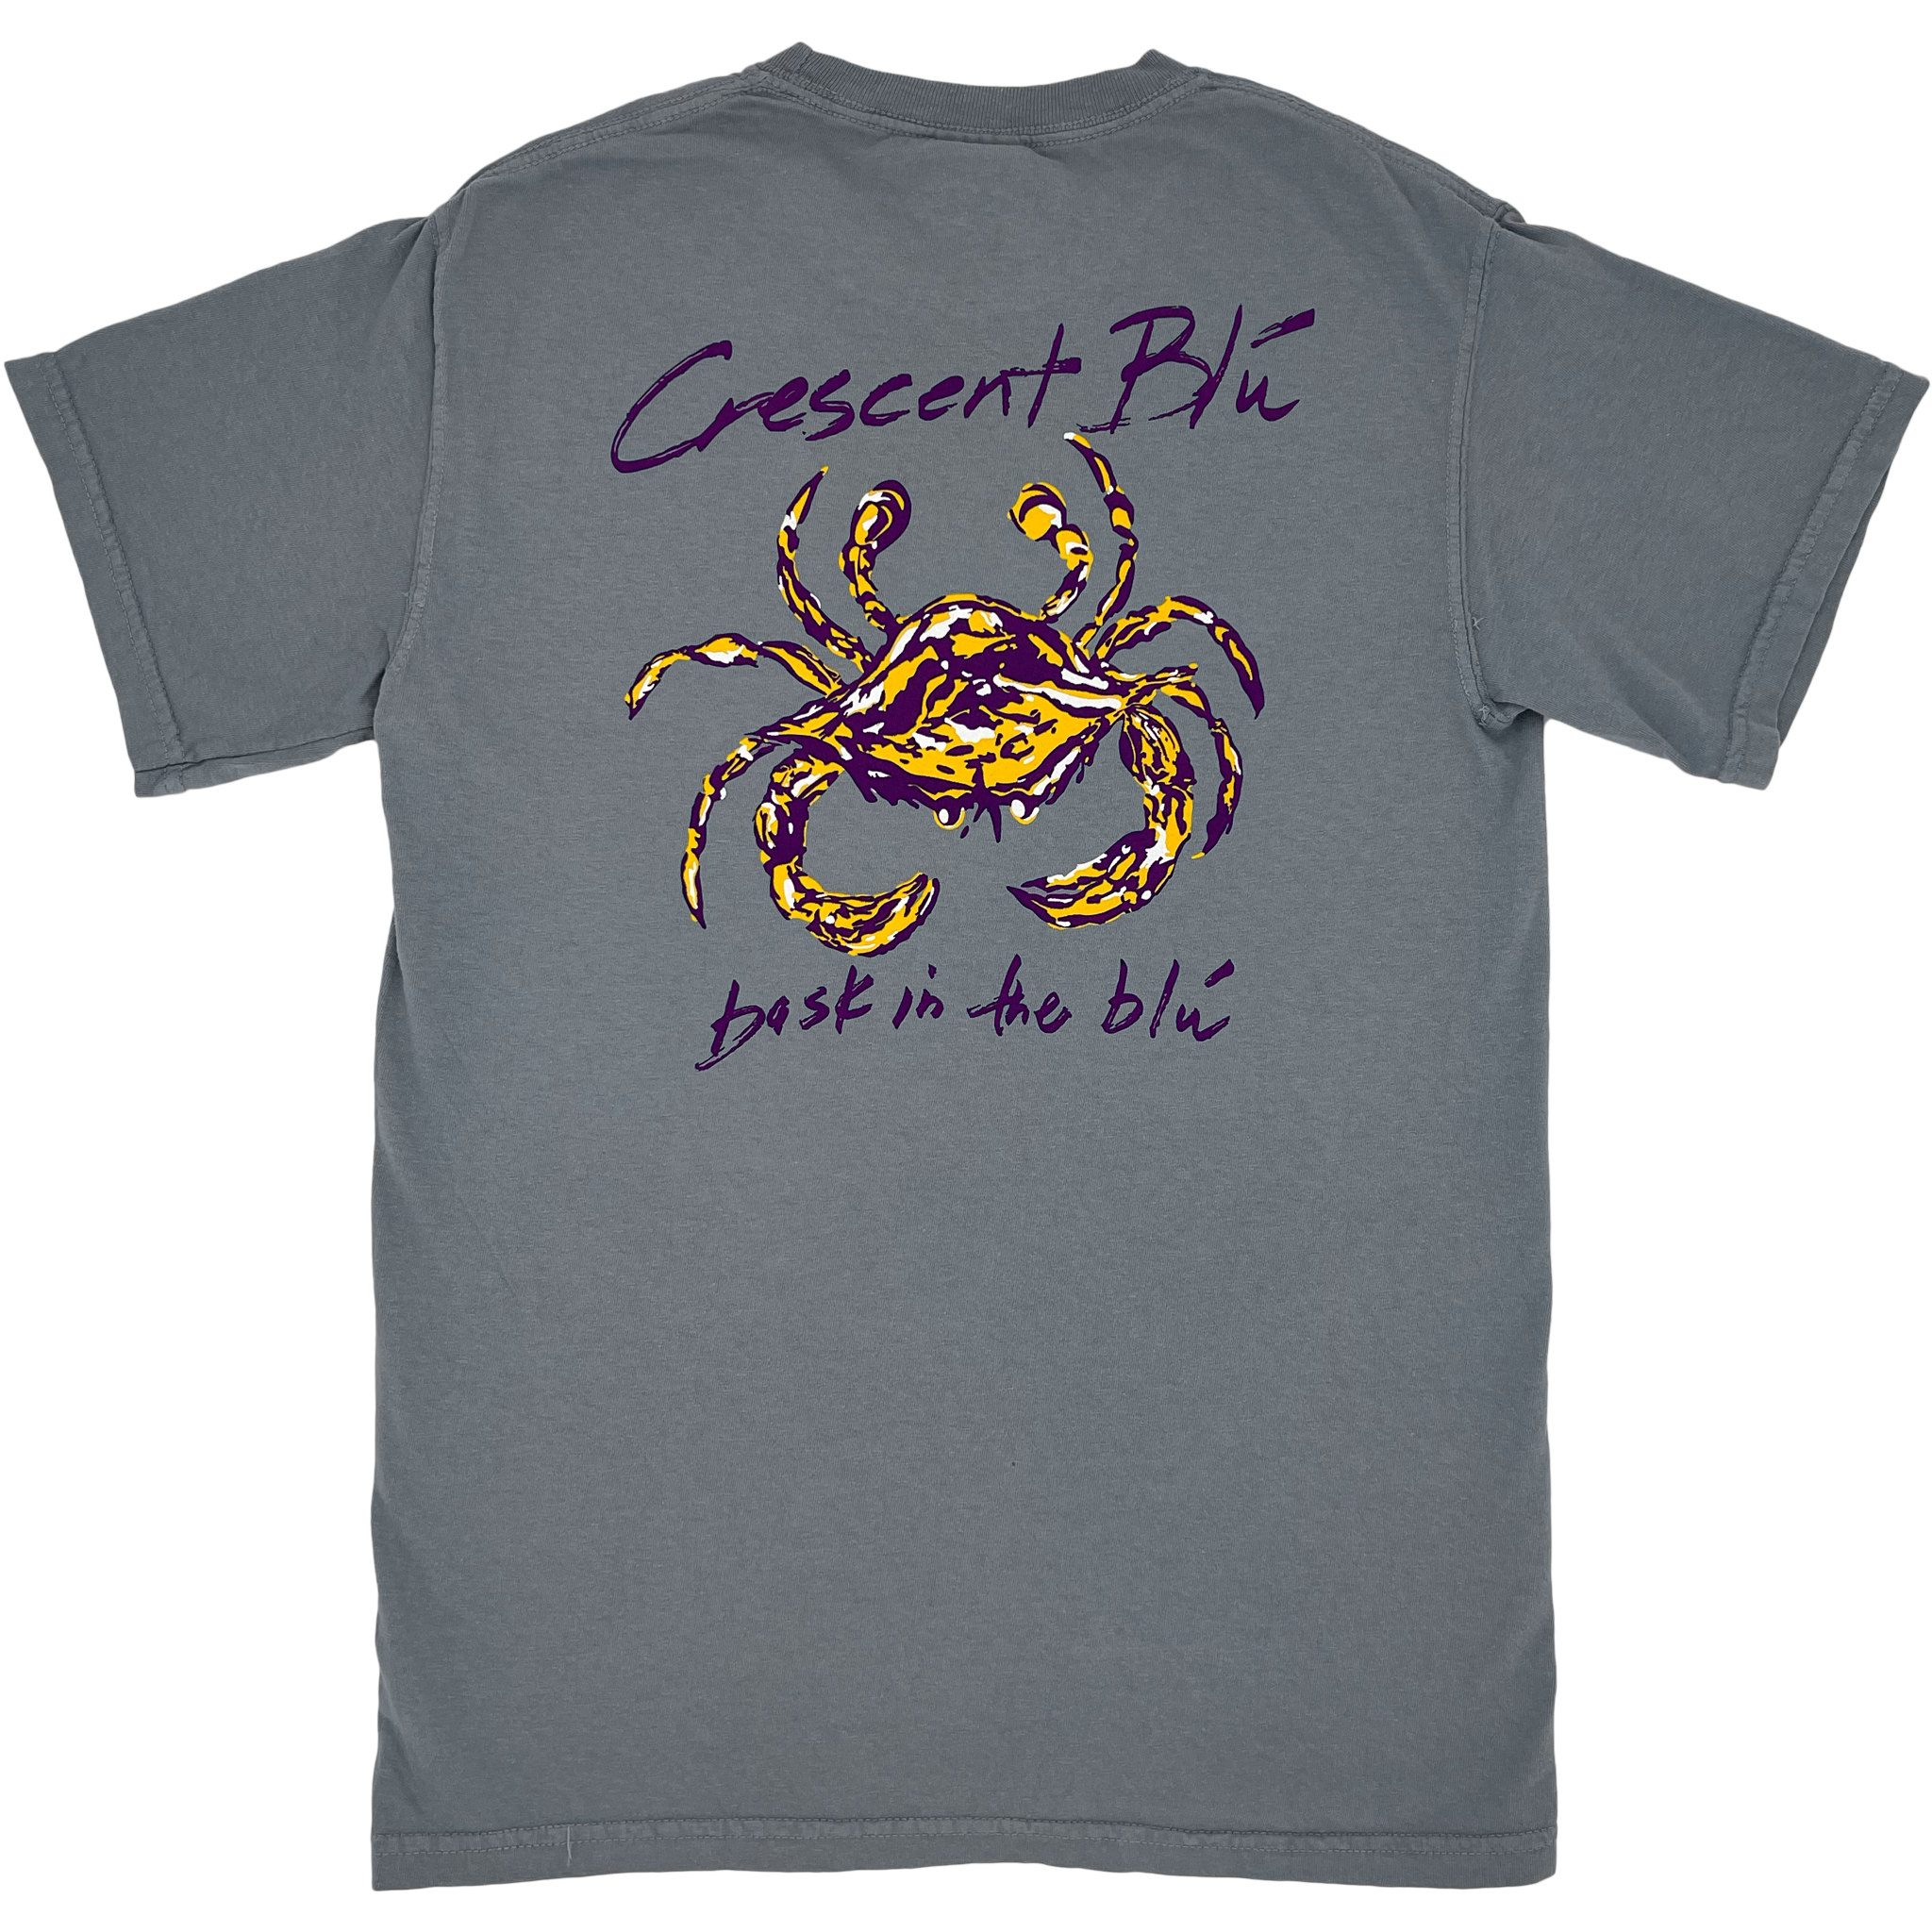 Purple & Gold Adult Short Sleeve T-shirt